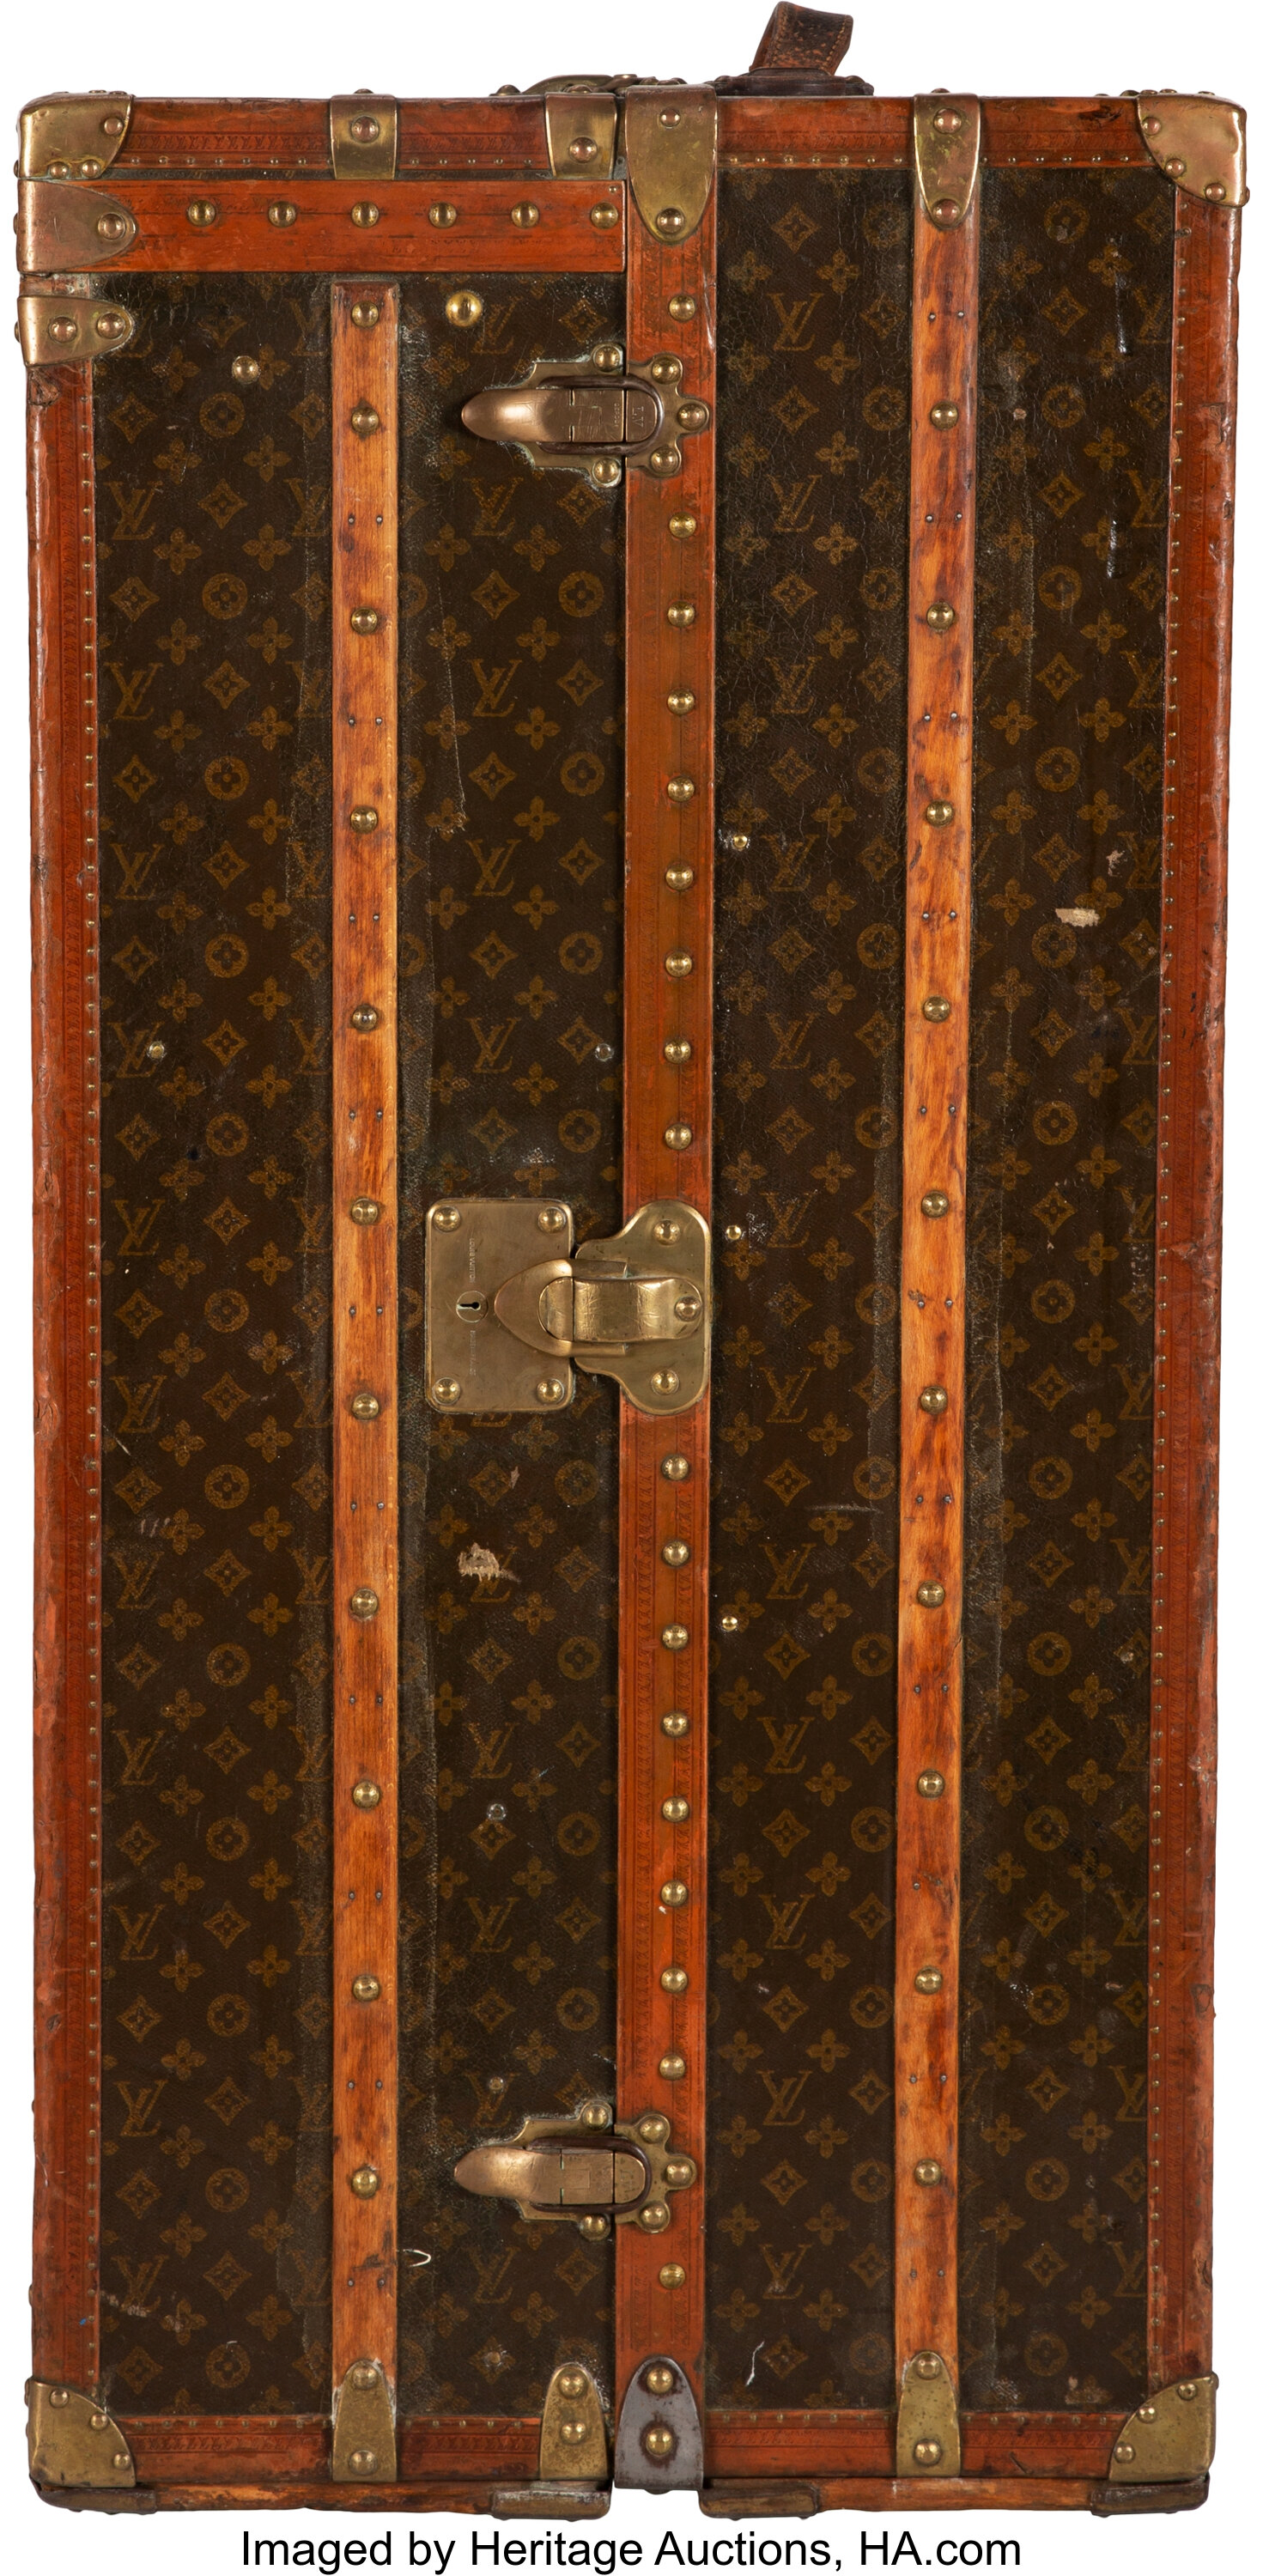 Sold at Auction: Vintage Louis Vuitton Wardrobe Steamer Trunk